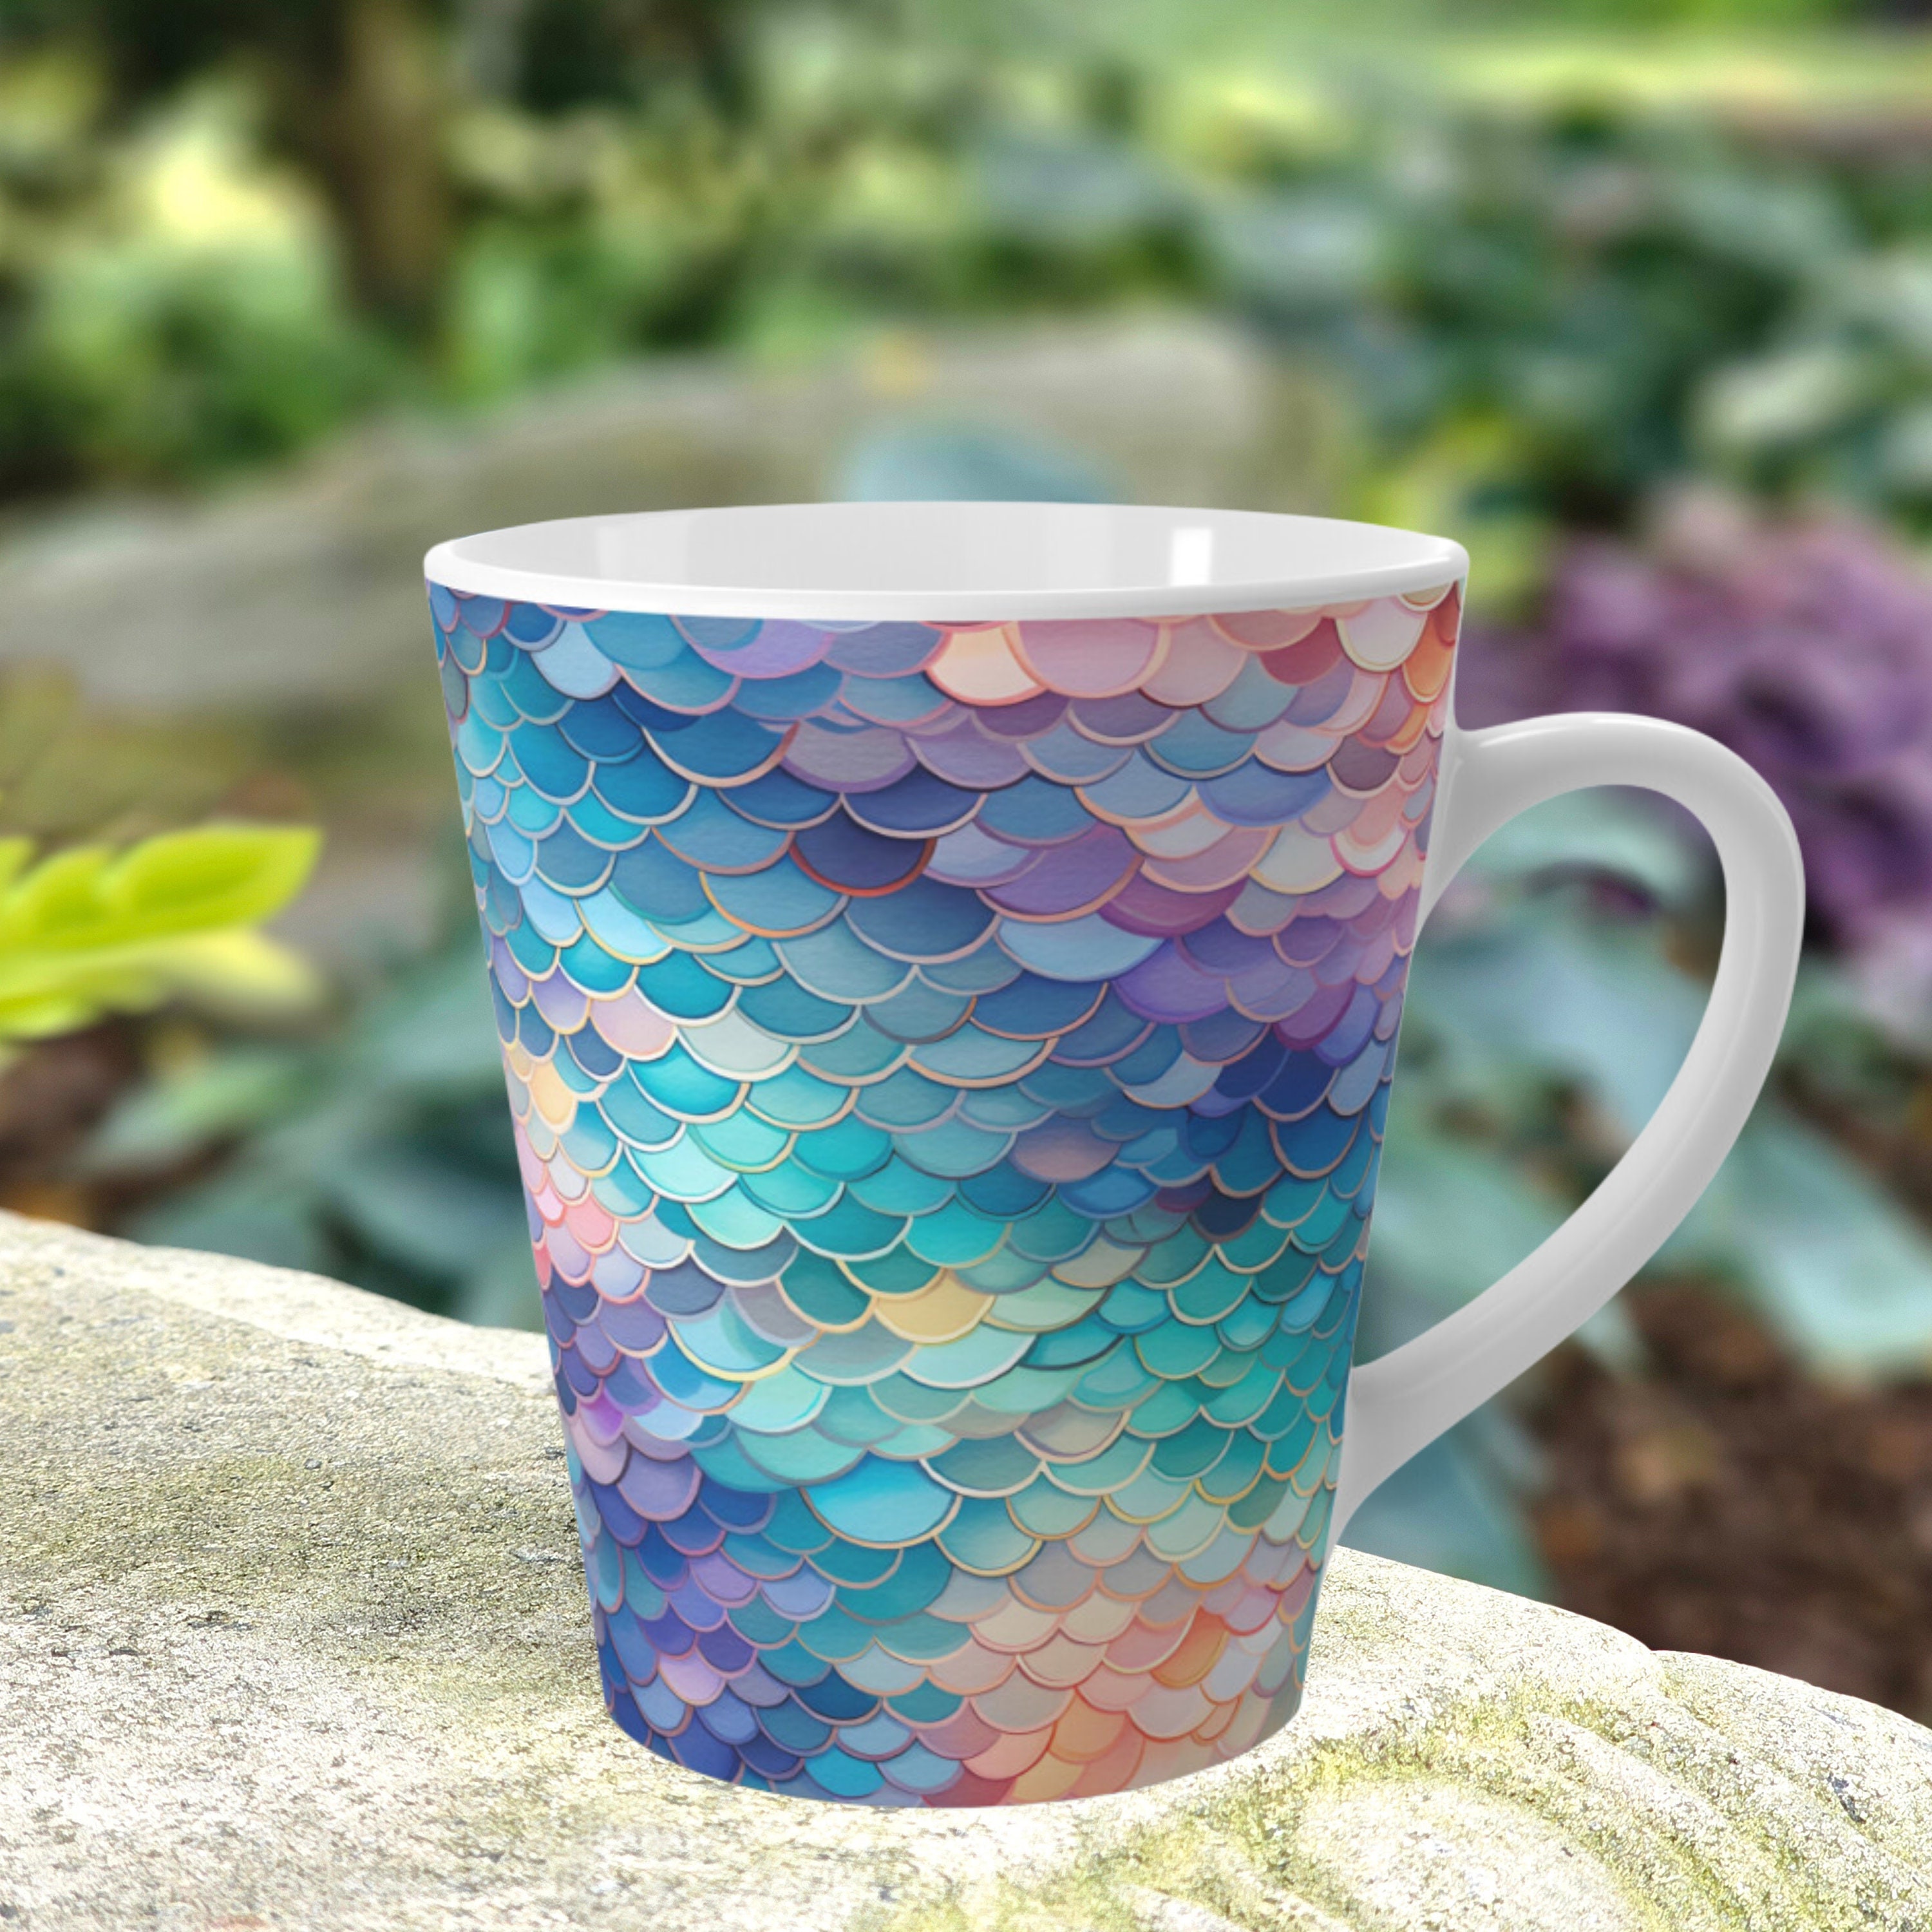 Ocean Swell Non-Breakable Coffee Mug Set